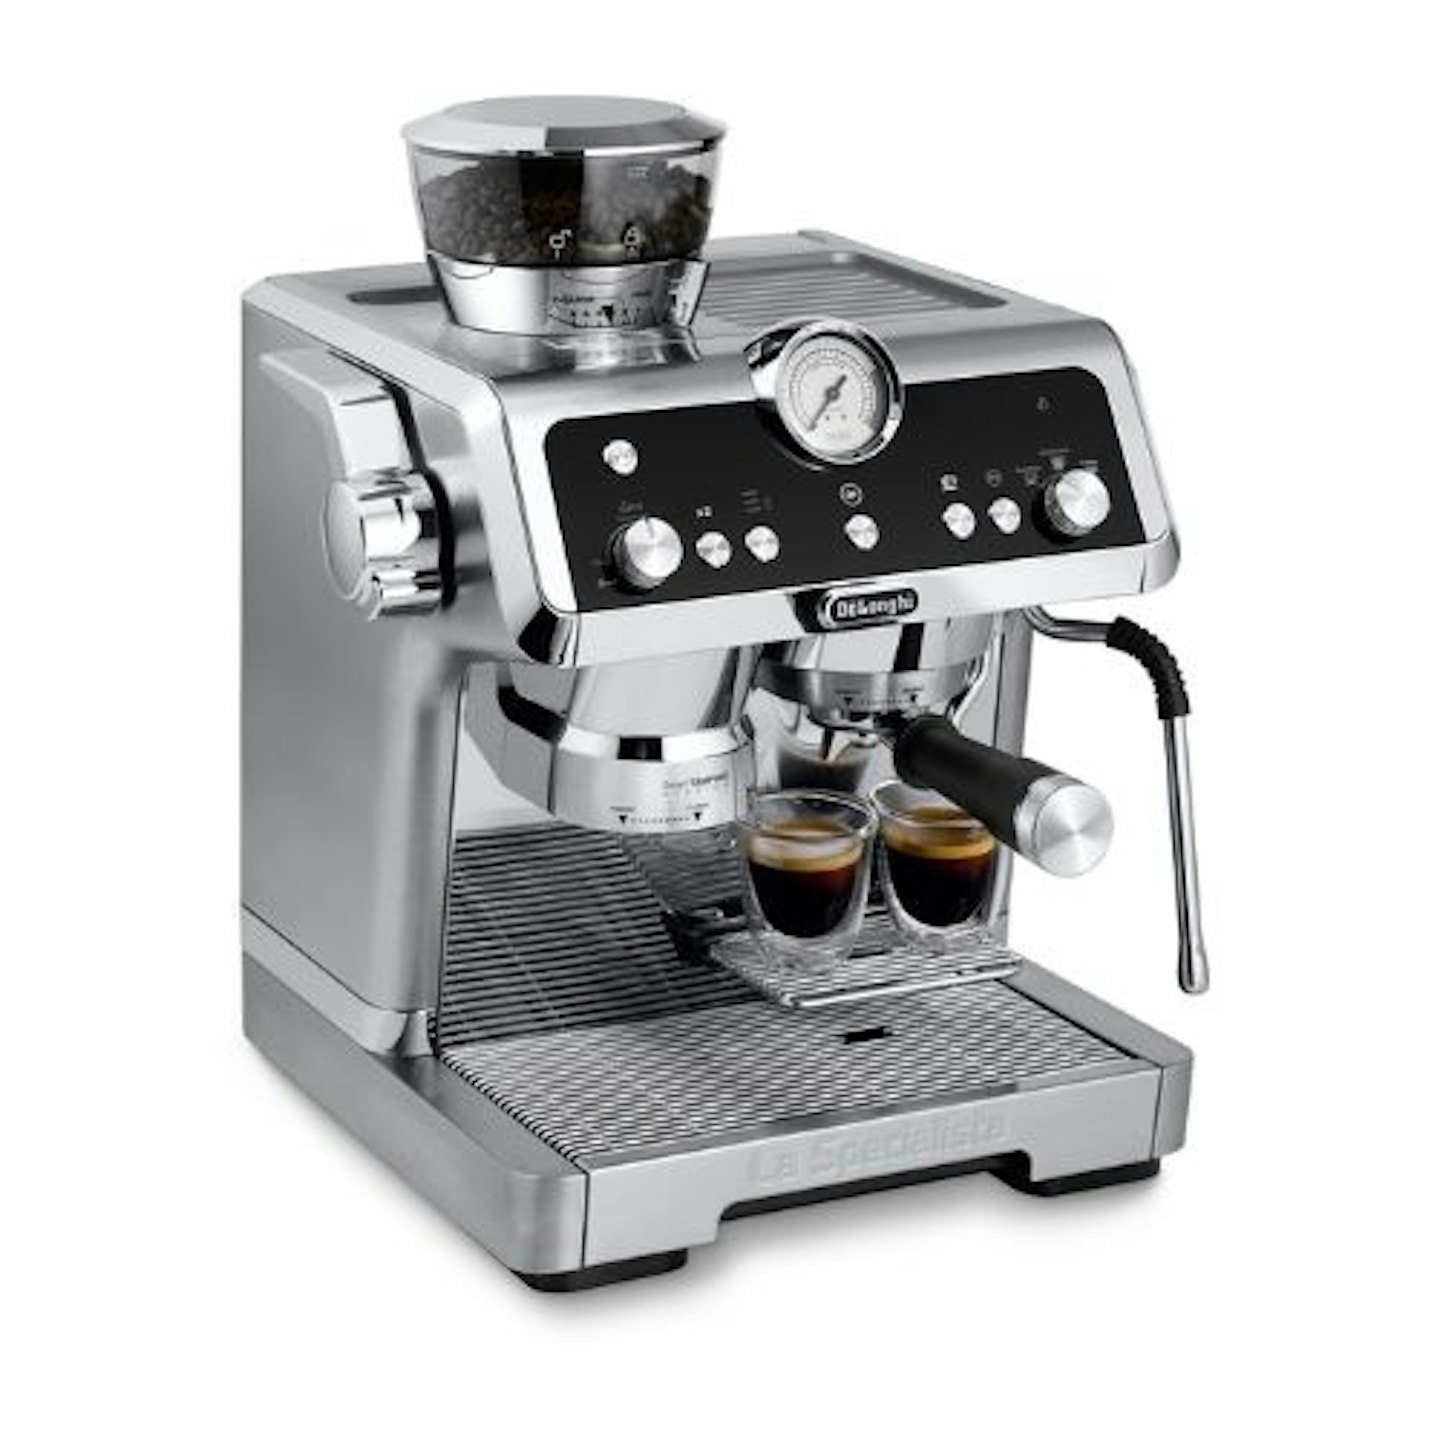 Delonghi La Specialista Prestigio Manual Bean to Cup Espresso Coffee & Cappuccino Machine - Metal